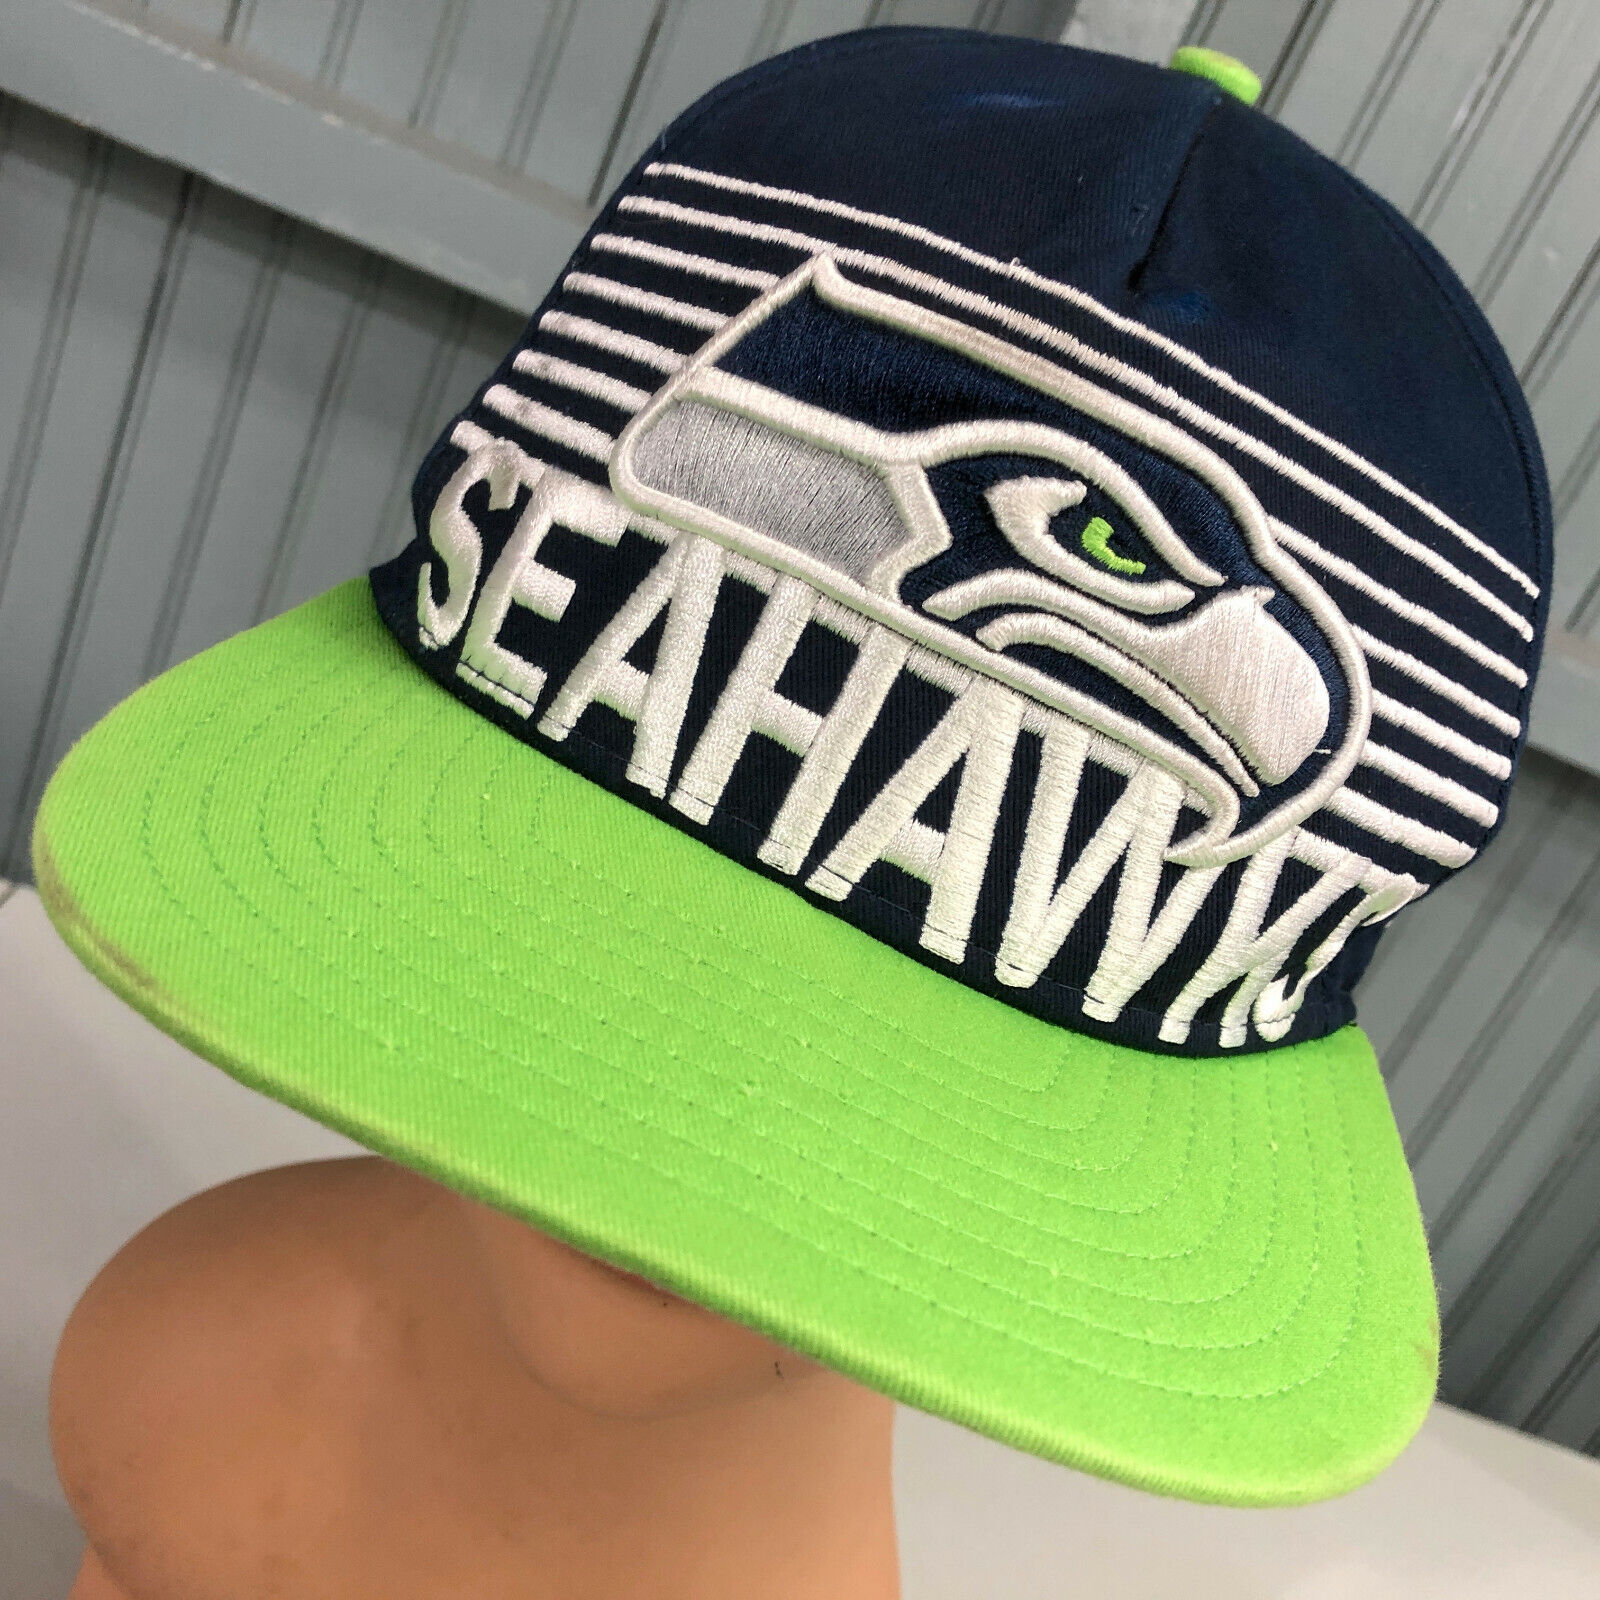 Seattle Seahawks New Era Snapback Baseball Hat Cap - image 1